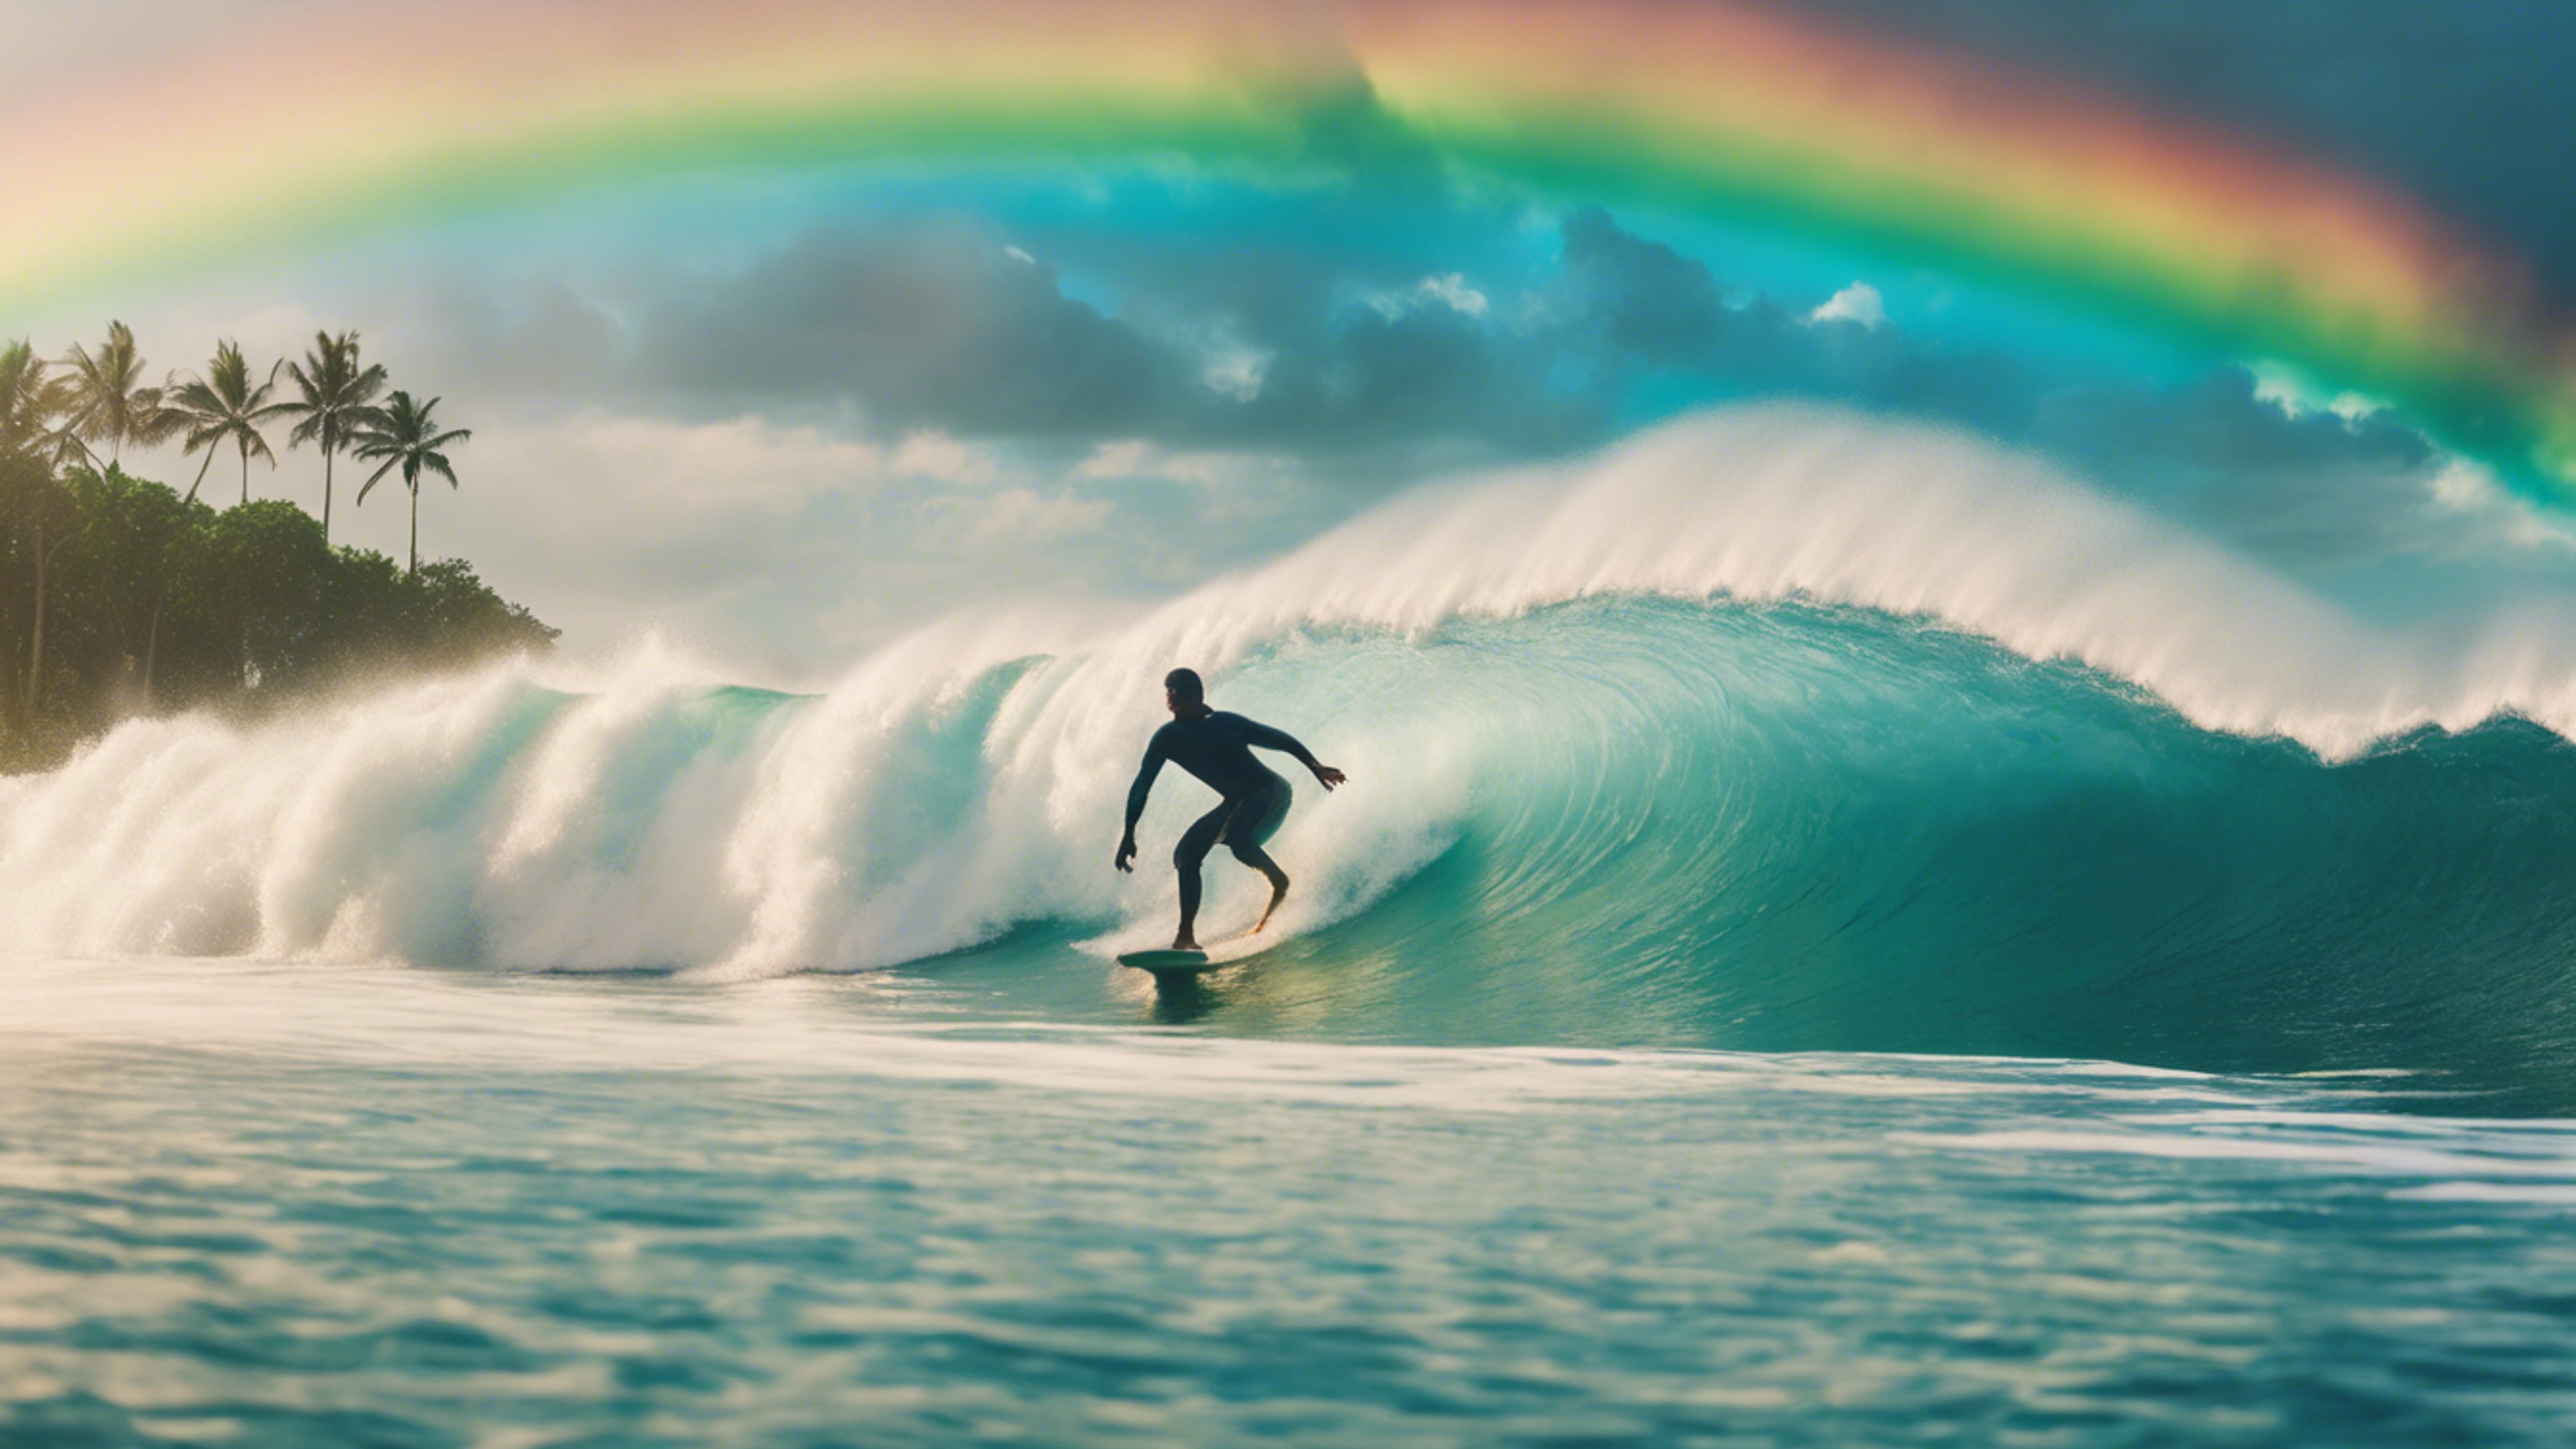 A spontaneous man surfing on a giant wave under a scintillating rainbow in a tropical ocean. Tapeta[41deec9b24da40d39c6d]